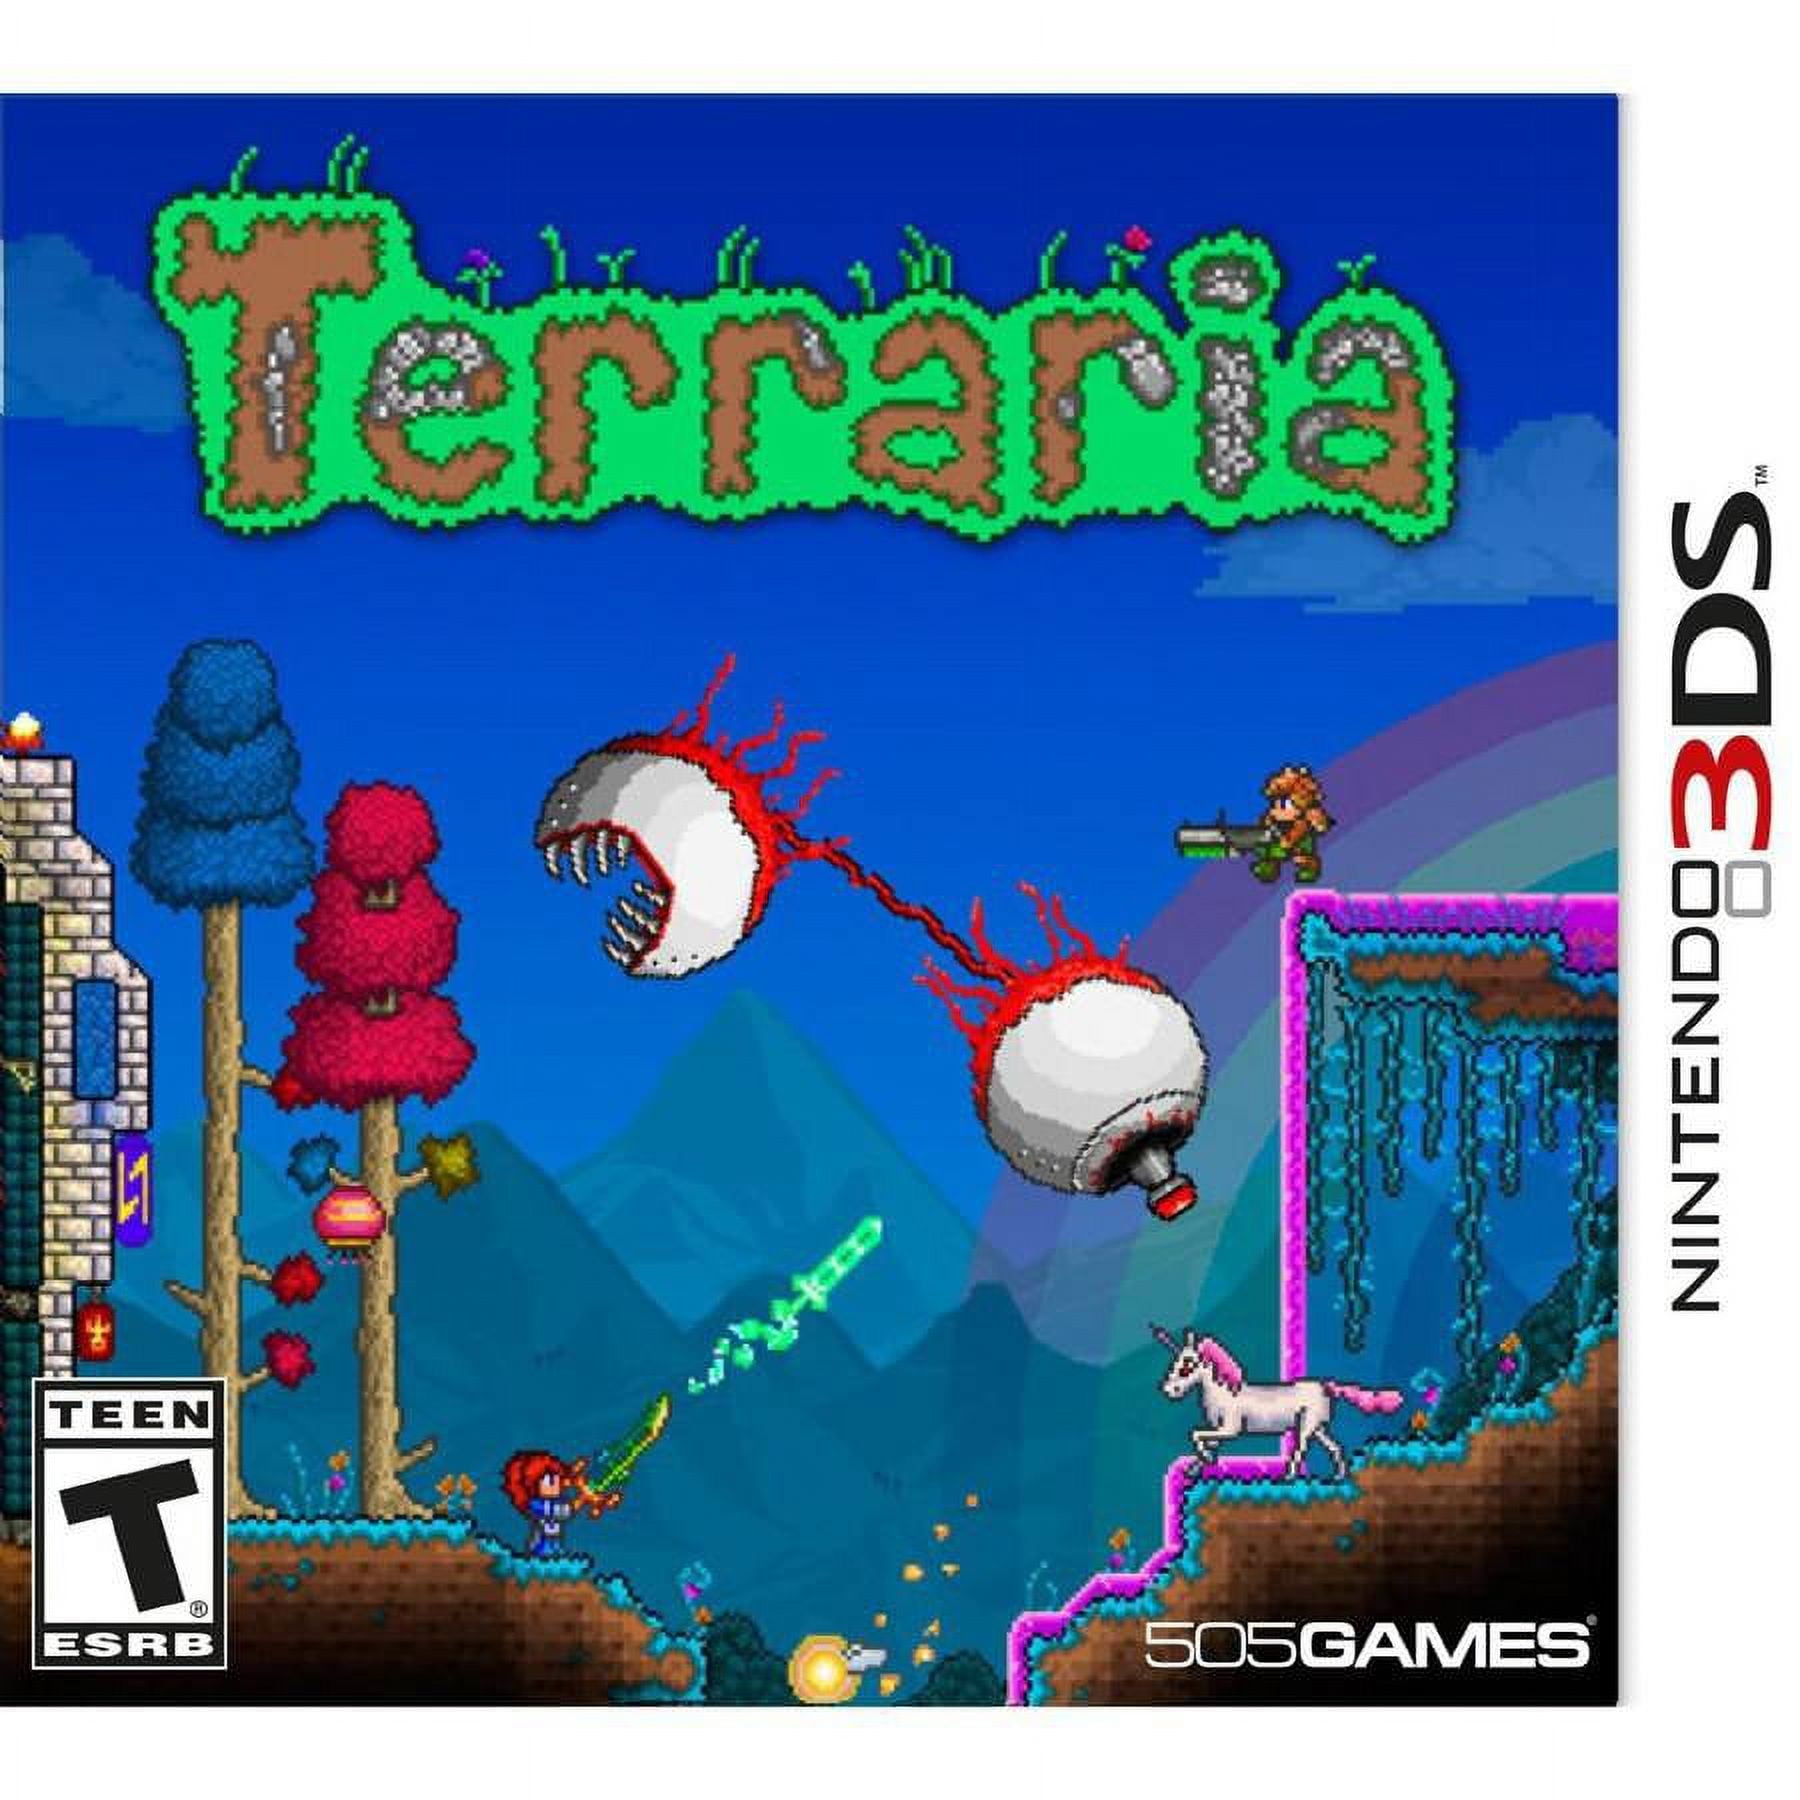 Terraria, 505 Games, Nintendo Switch, 812872017150 